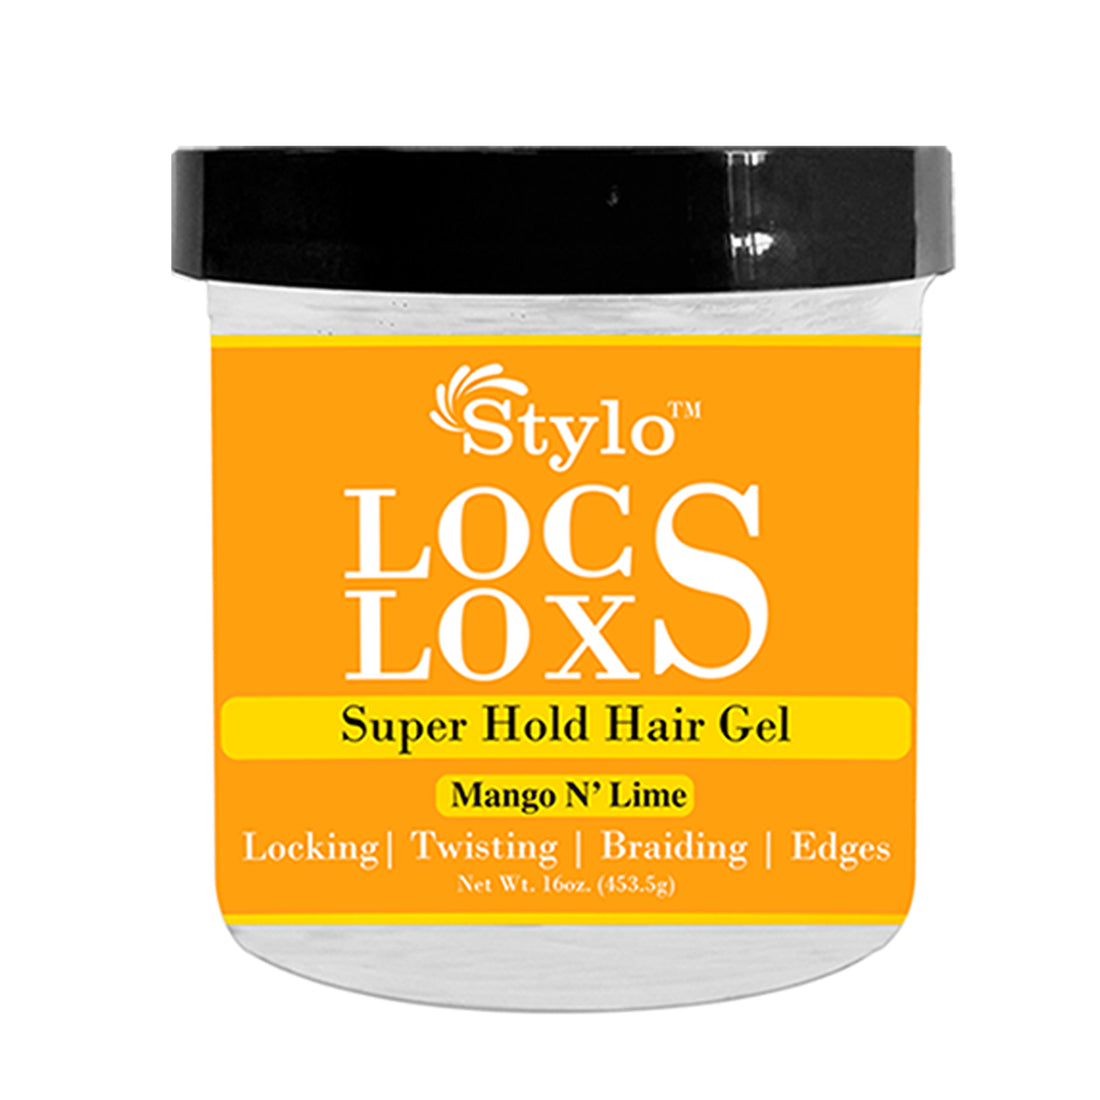 Stylo Locs Loxs Super Hold Hair Styling Gel - Mango N&